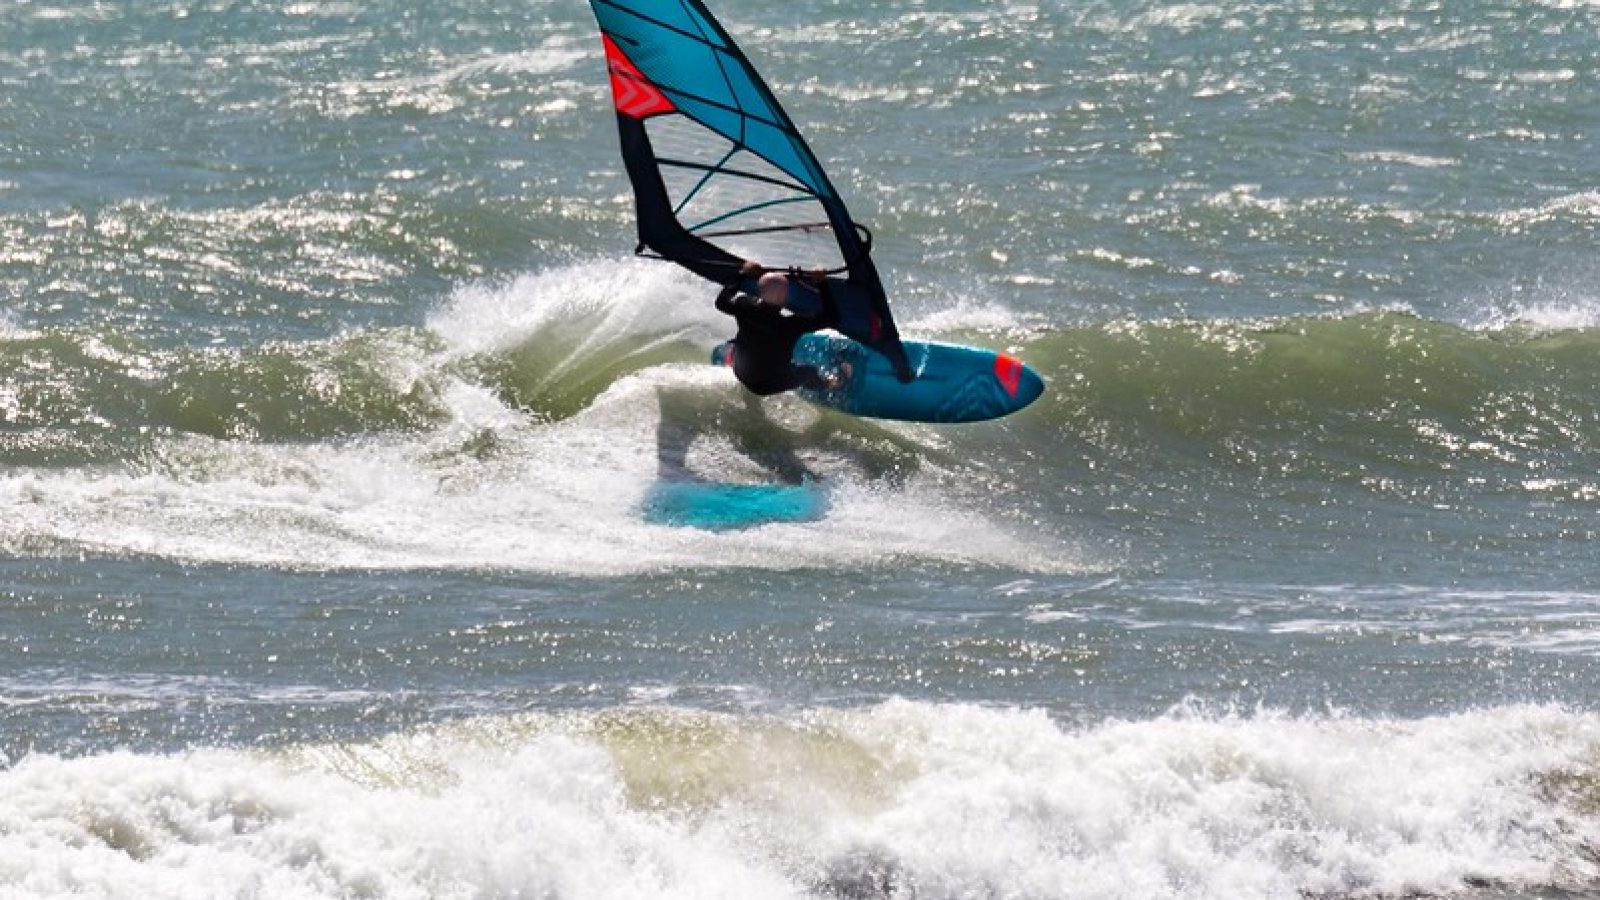 Windsurfer on a wave in Taranaki doing a top turn, New Zealand